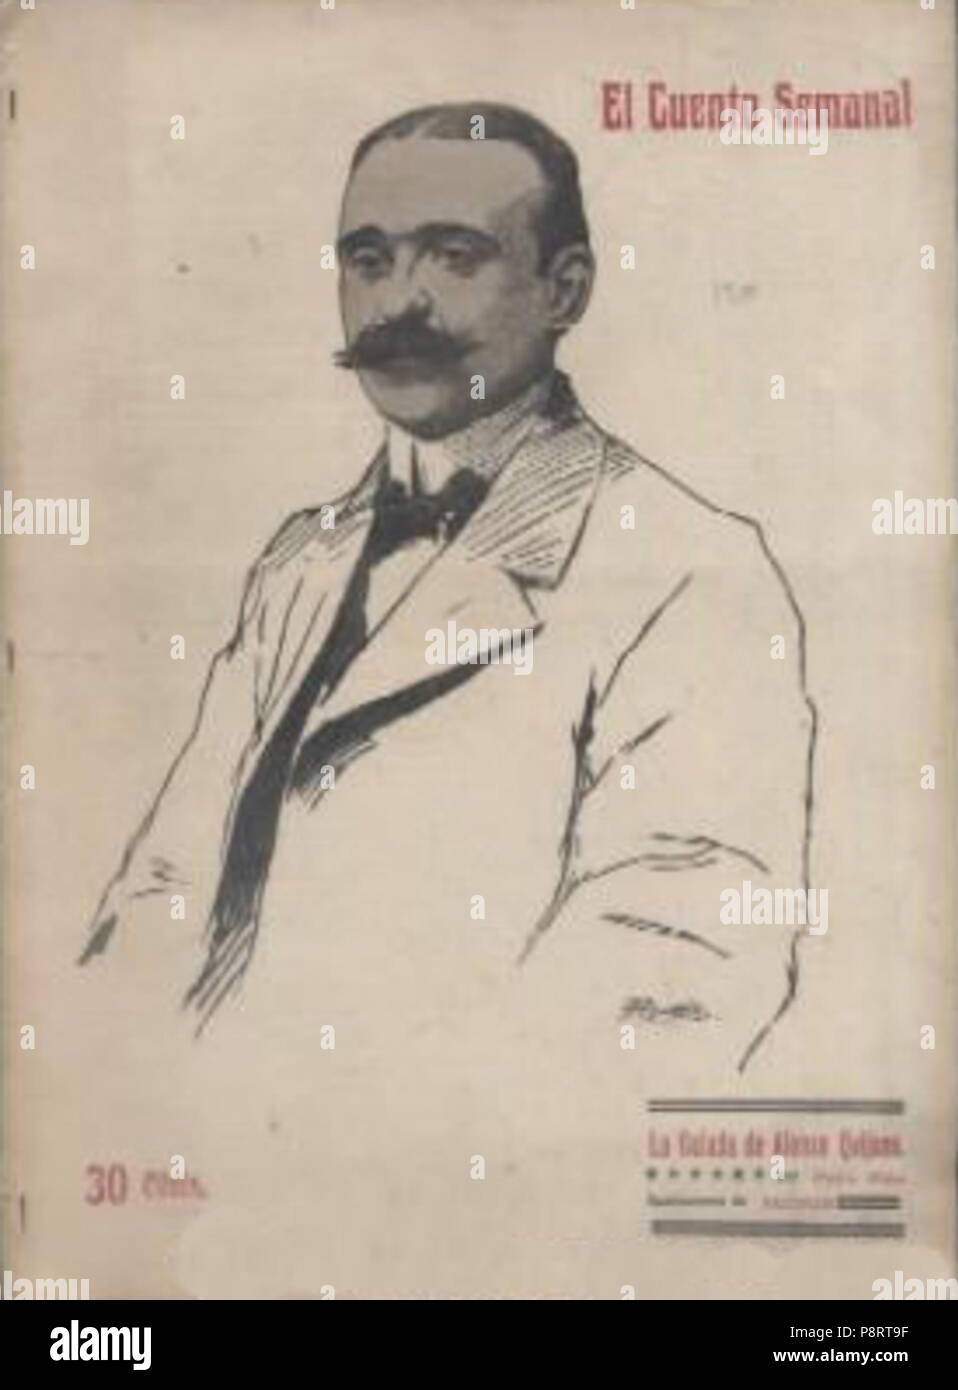 15 1909-04-16, El Cuento Semanal, La celada de Alonso Quijano, de Pedro Mata, Agustín, nº120 Stock Photo